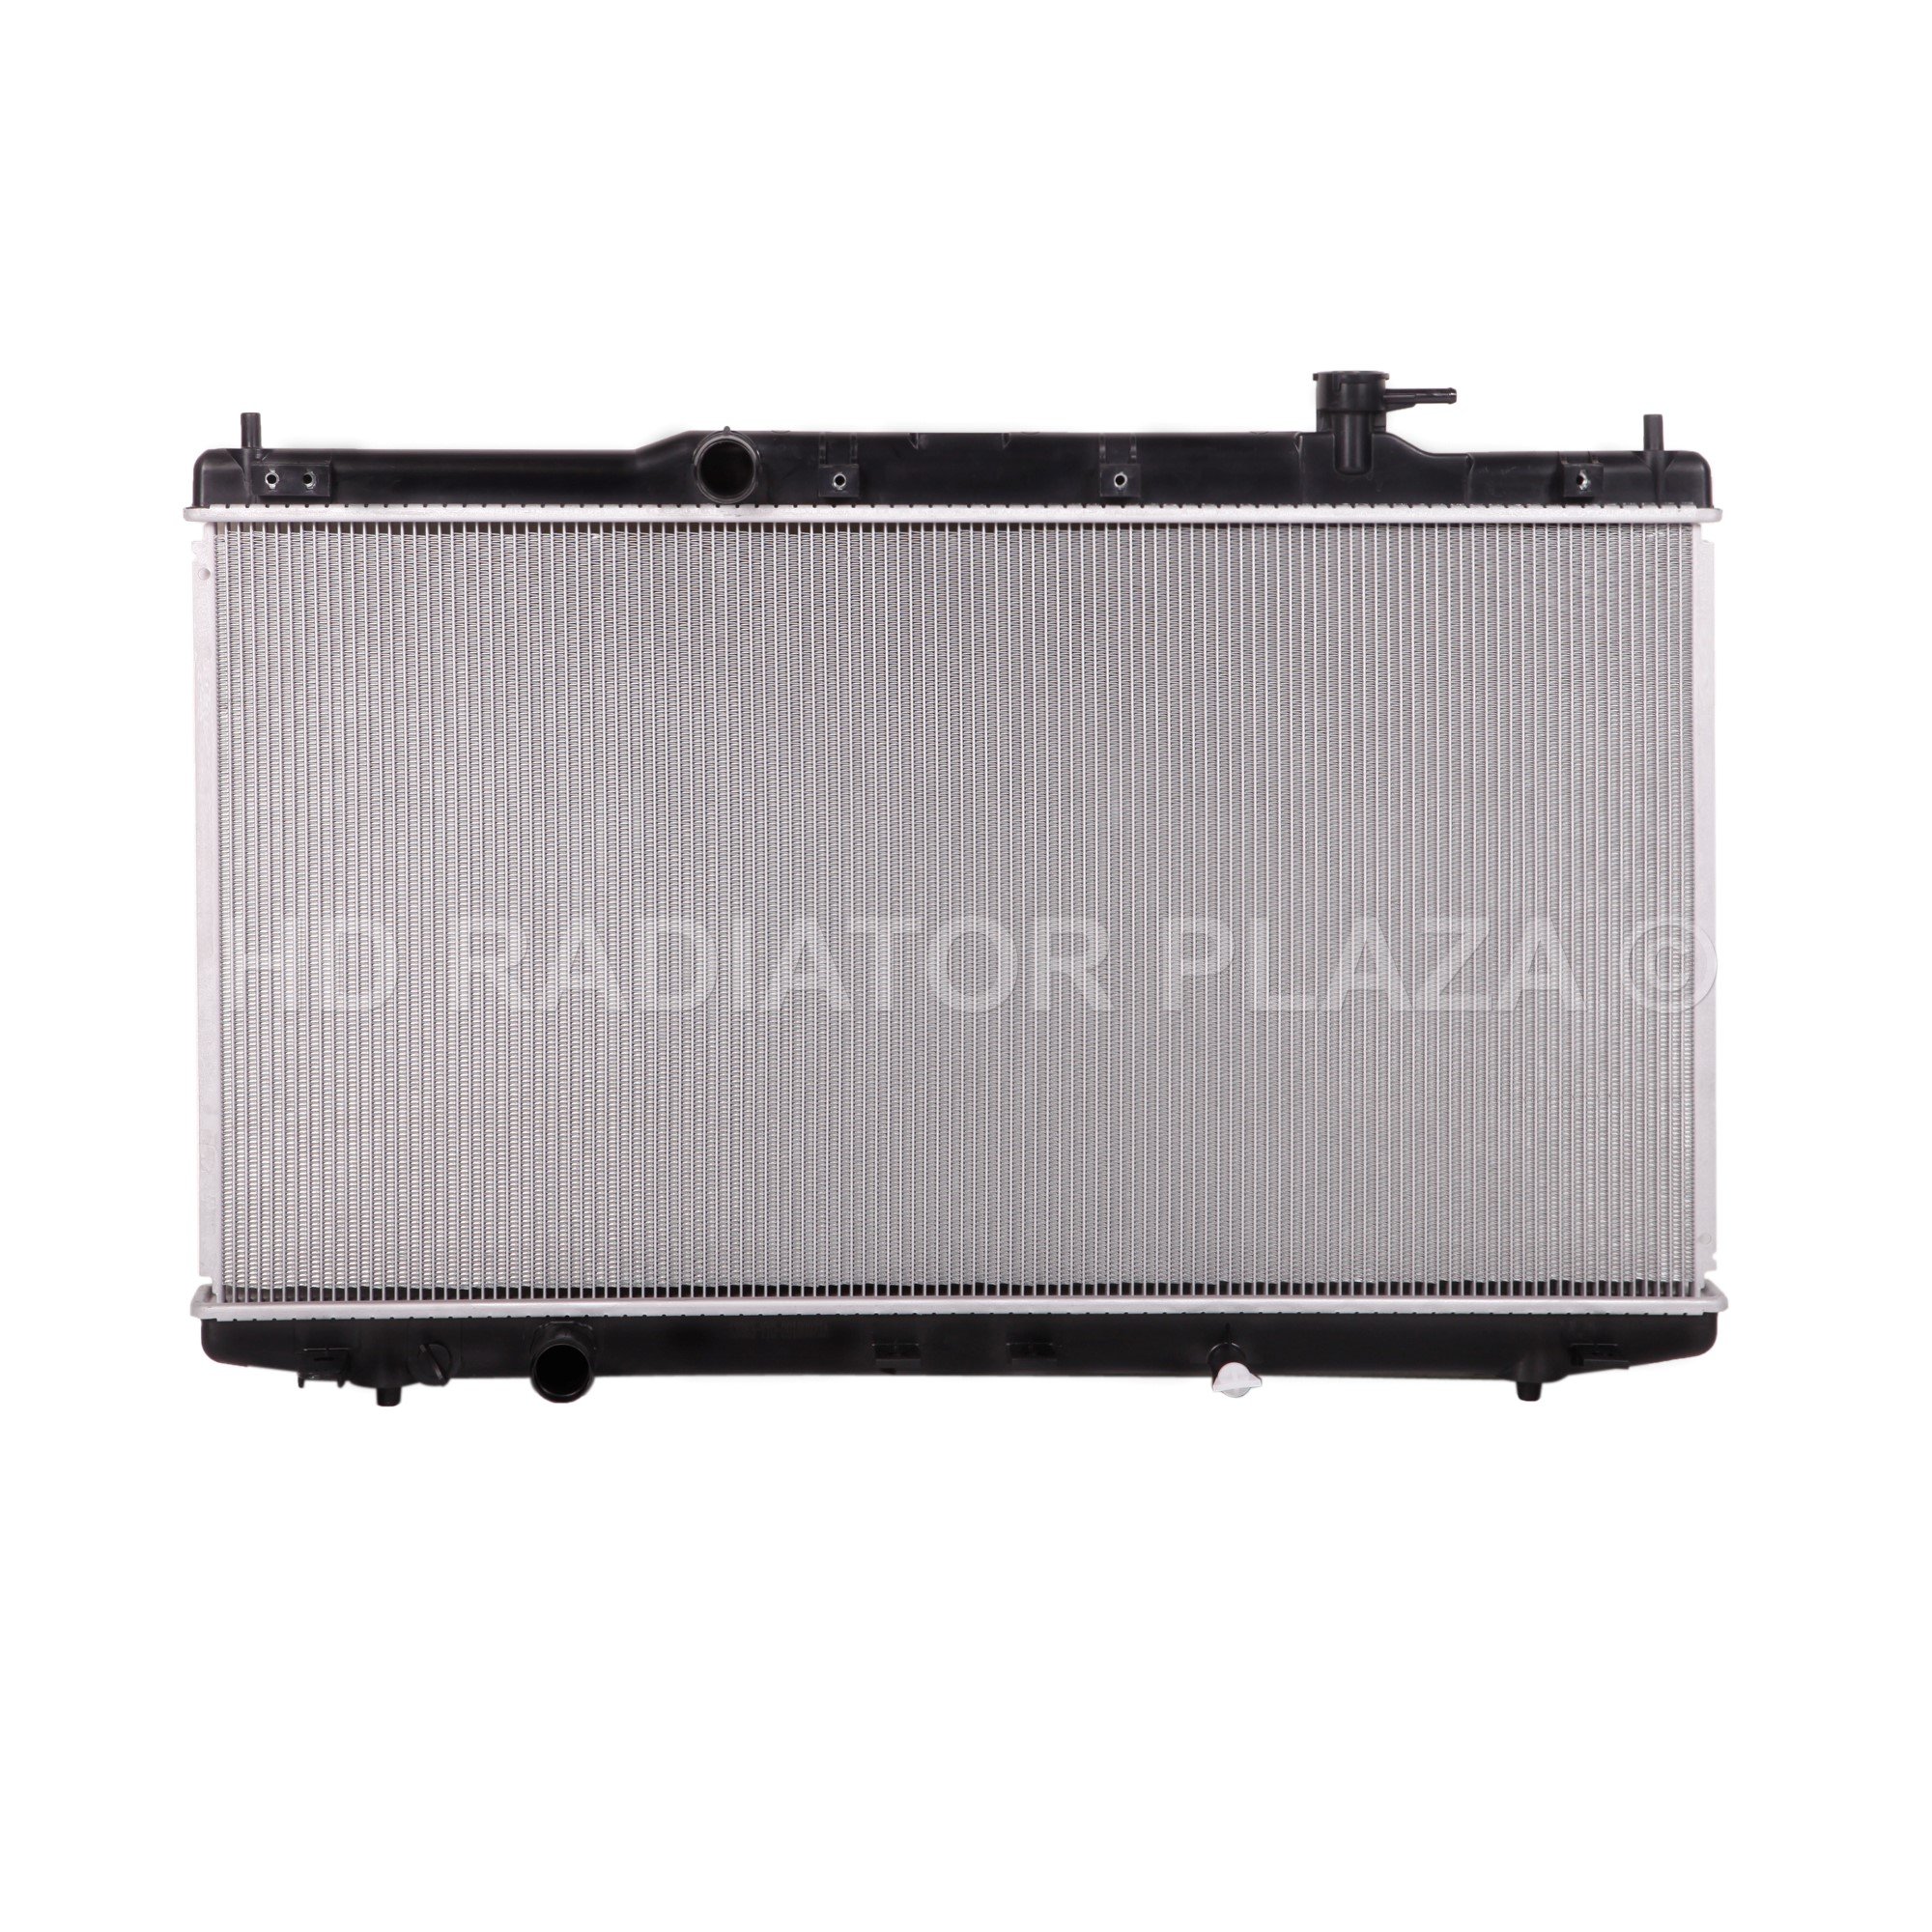 Radiator for 12-19 Honda Accord / CRV, Acura TLX